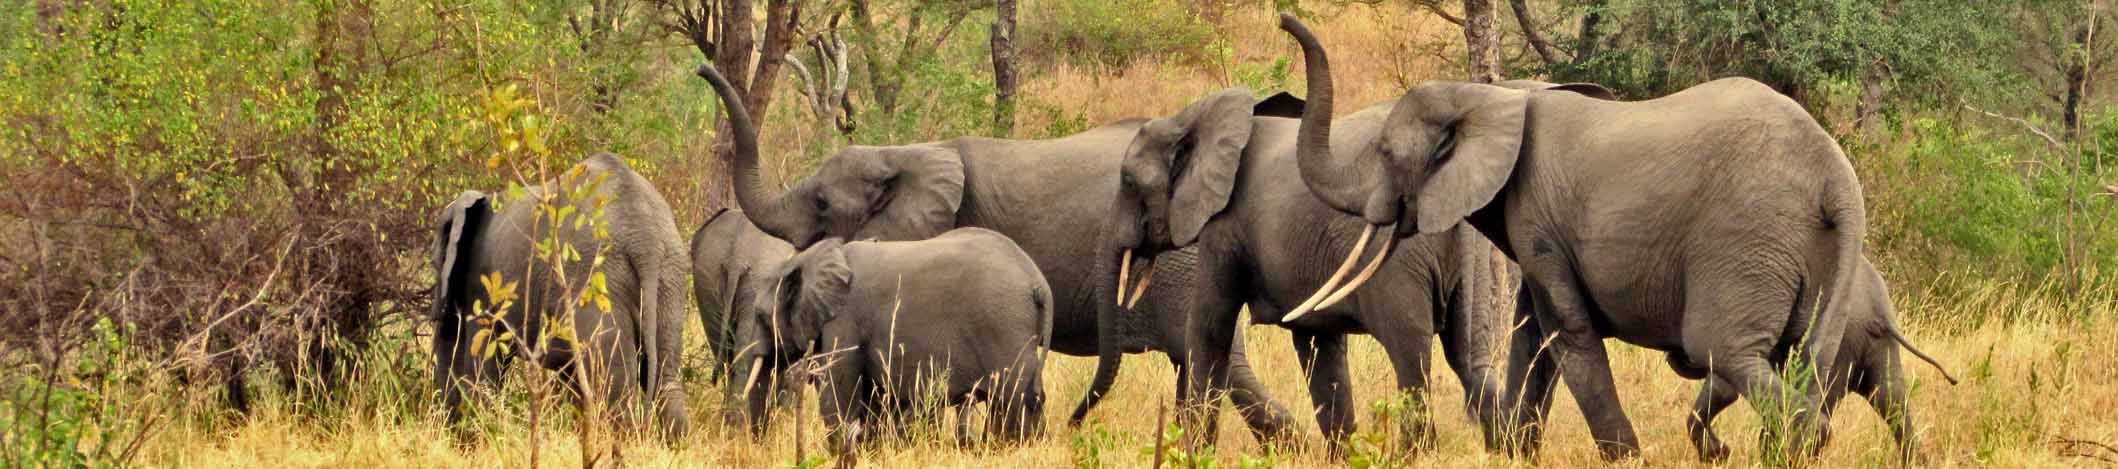 Forest elephants in Semliki Wildlife Reserve | Wildplaces Africa